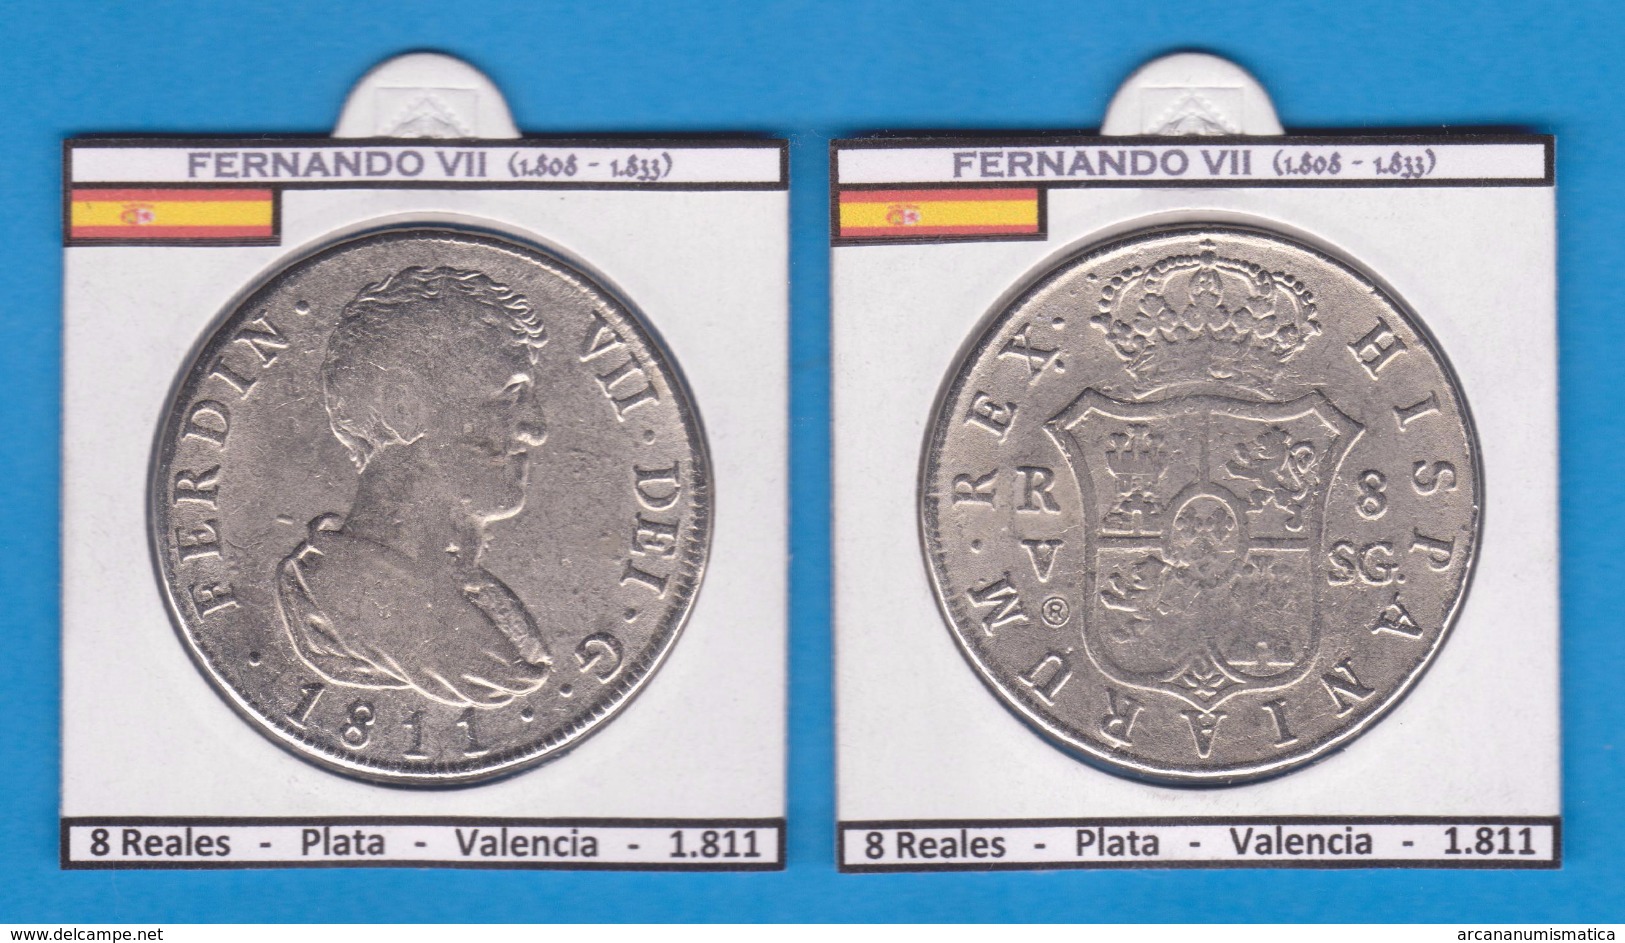 FERNANDO VII 1.808-1.833 8 Reales Plata Valencia 1.811 Réplica  DL-11.371 - Counterfeits